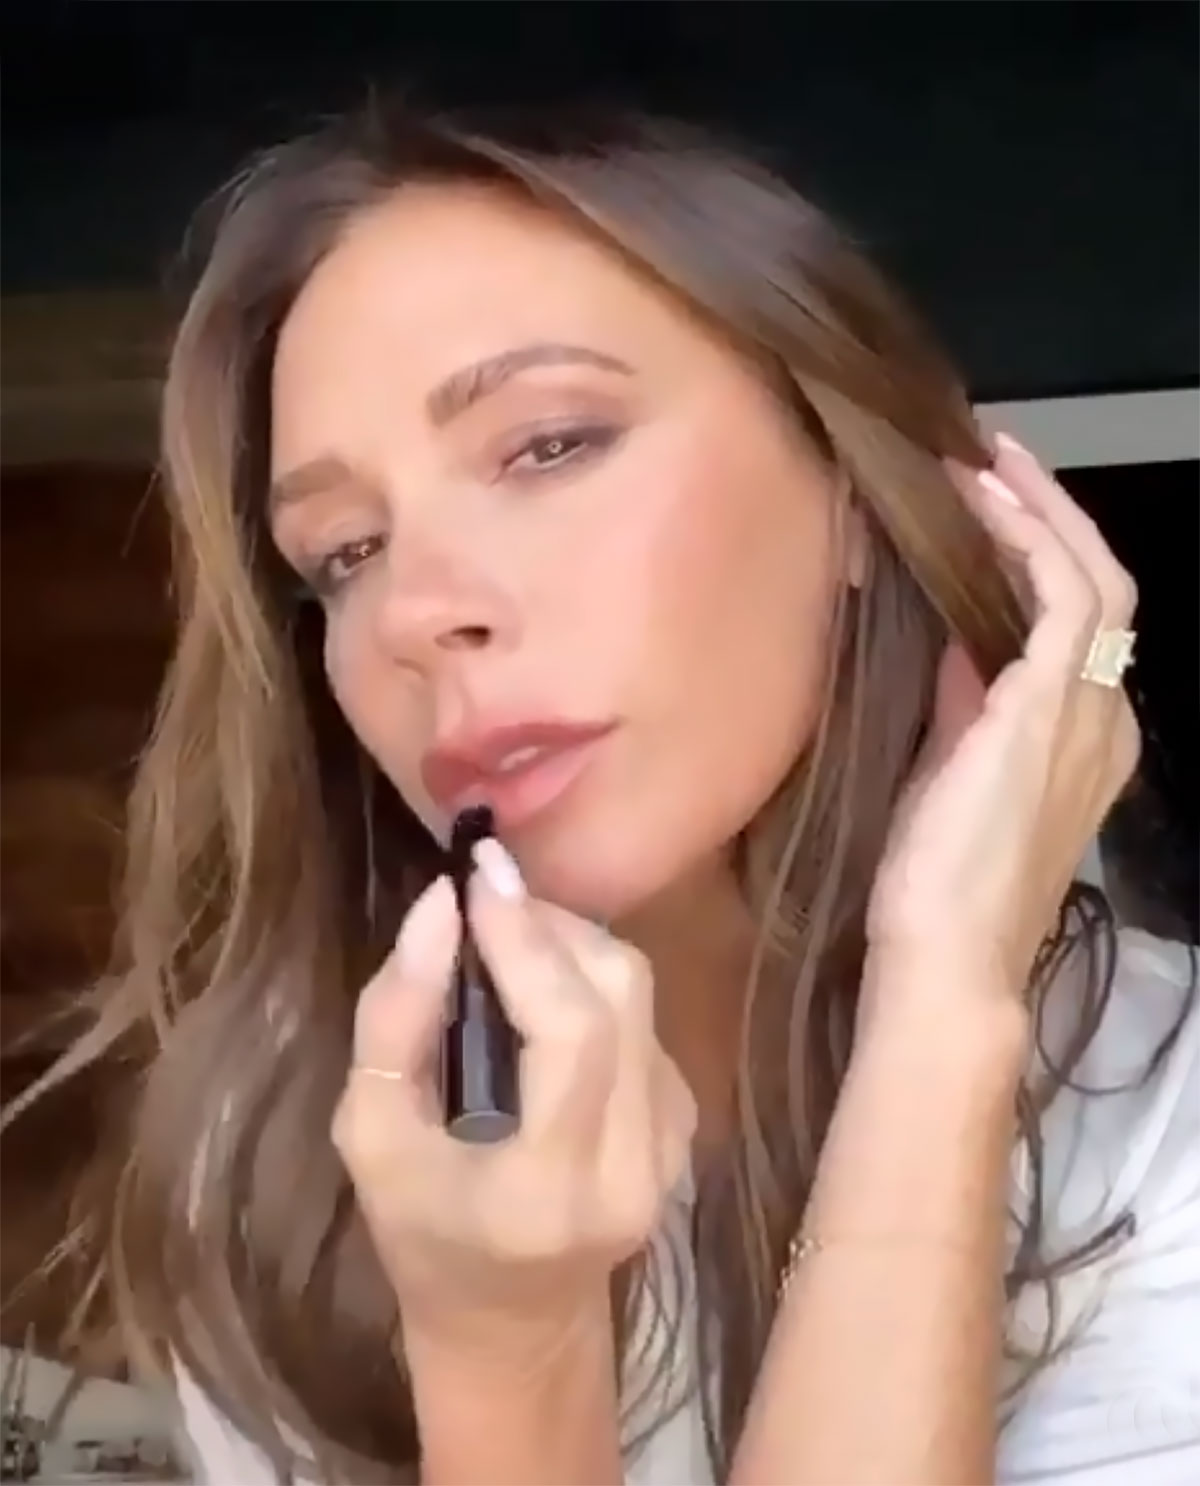 Review, Victoria Beckham Beauty Posh Lipstick (2021 Release)